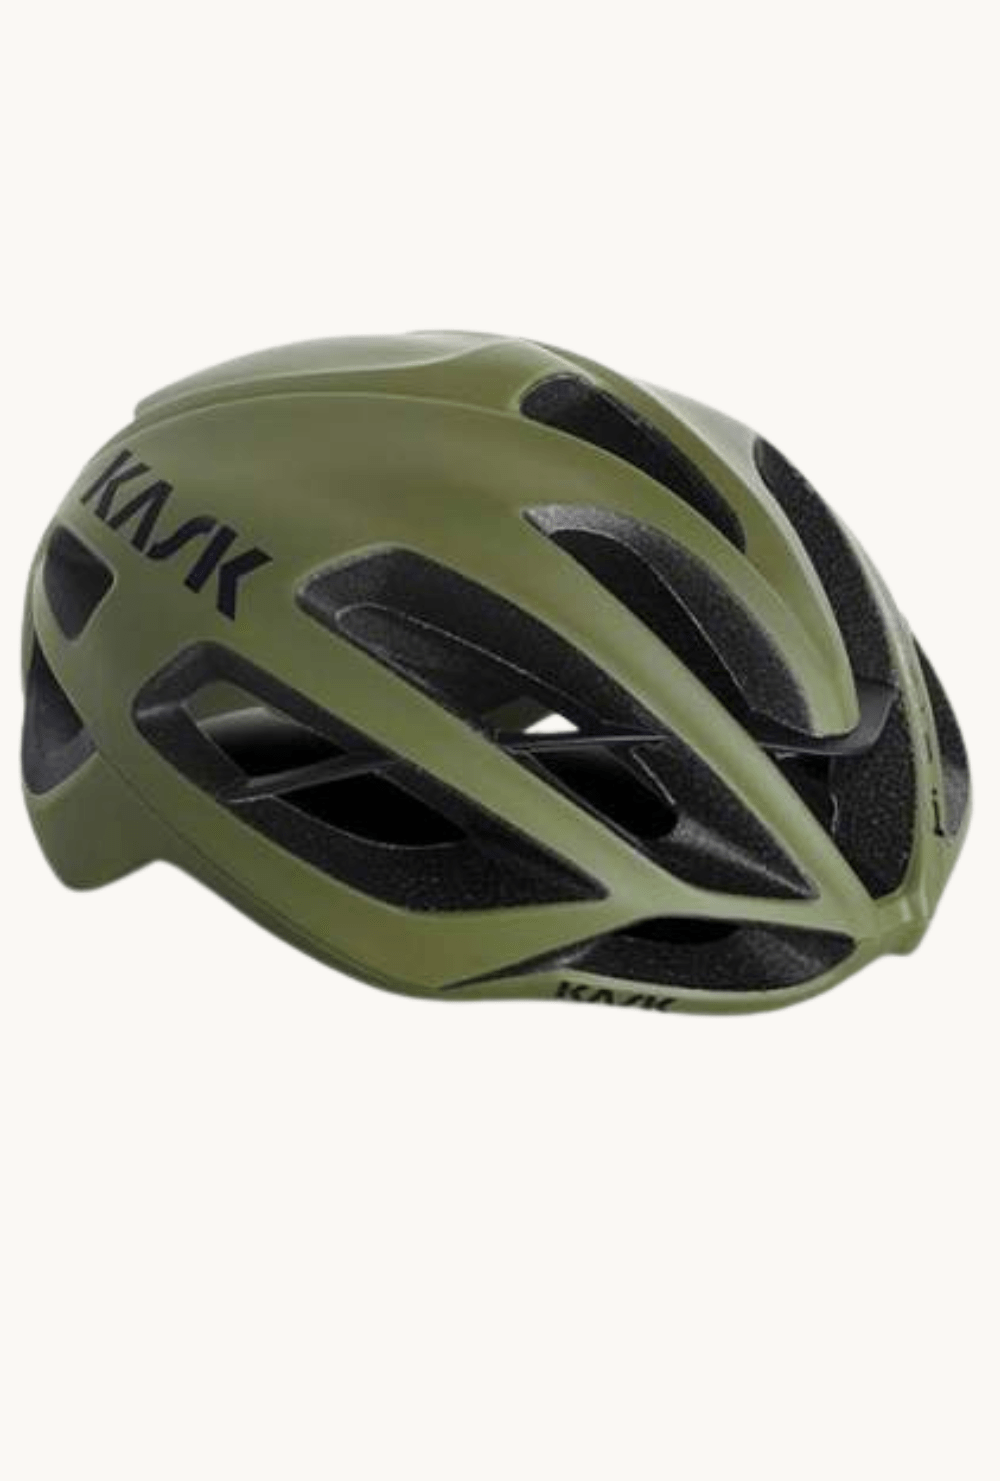 Helmet - Kask Protone Matt Olivesmall (50-56cm) / Matt Olive